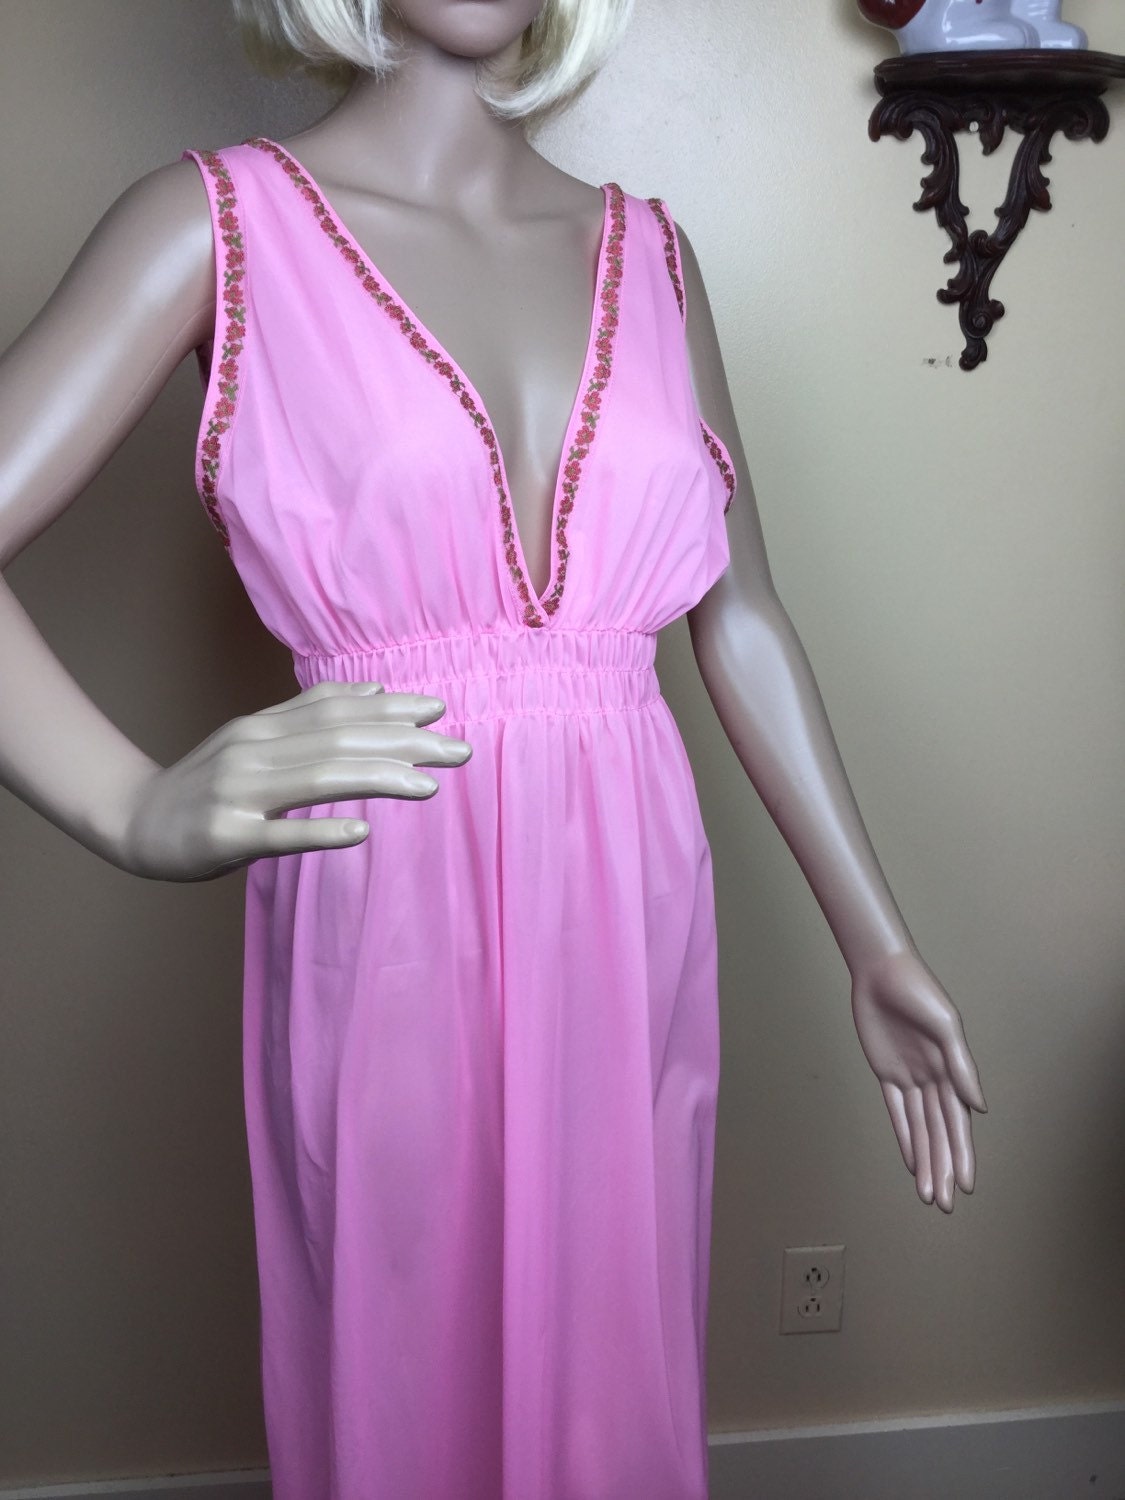 Pink Nightgown 1970s Hot Pink Nightie Vintage Lingerie